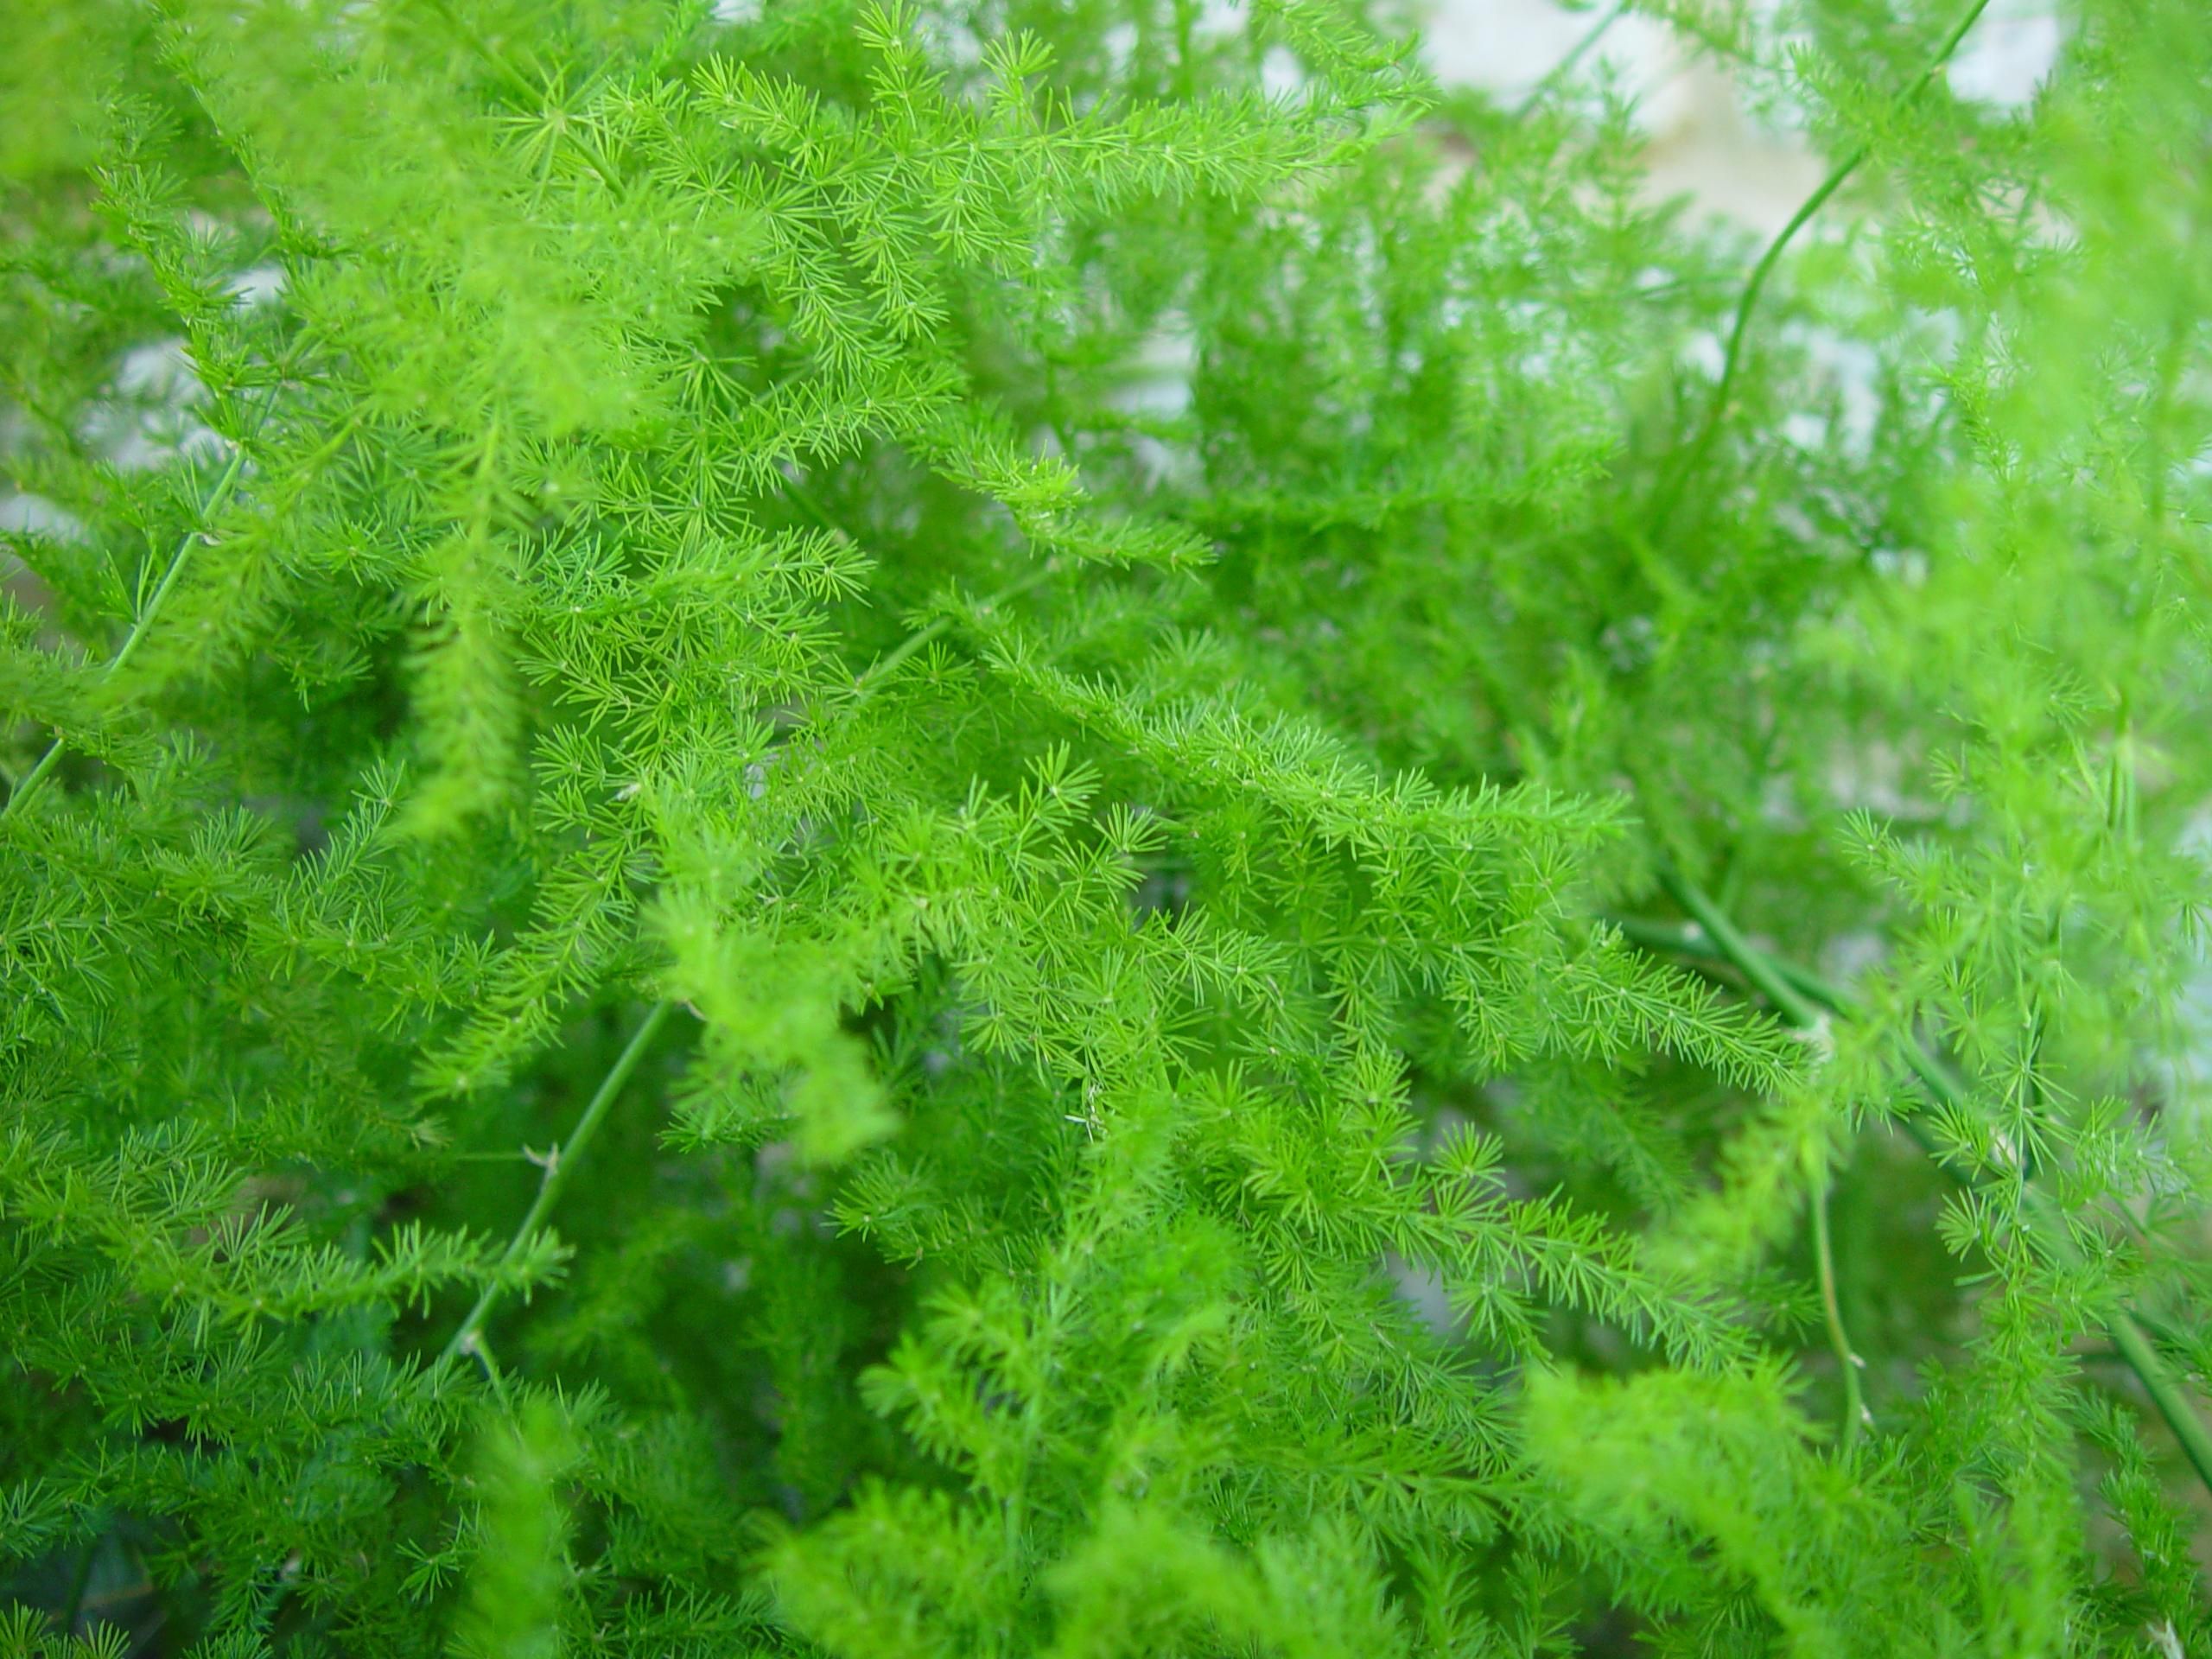 File:Green fern plant bush.jpg - Wikimedia Commons